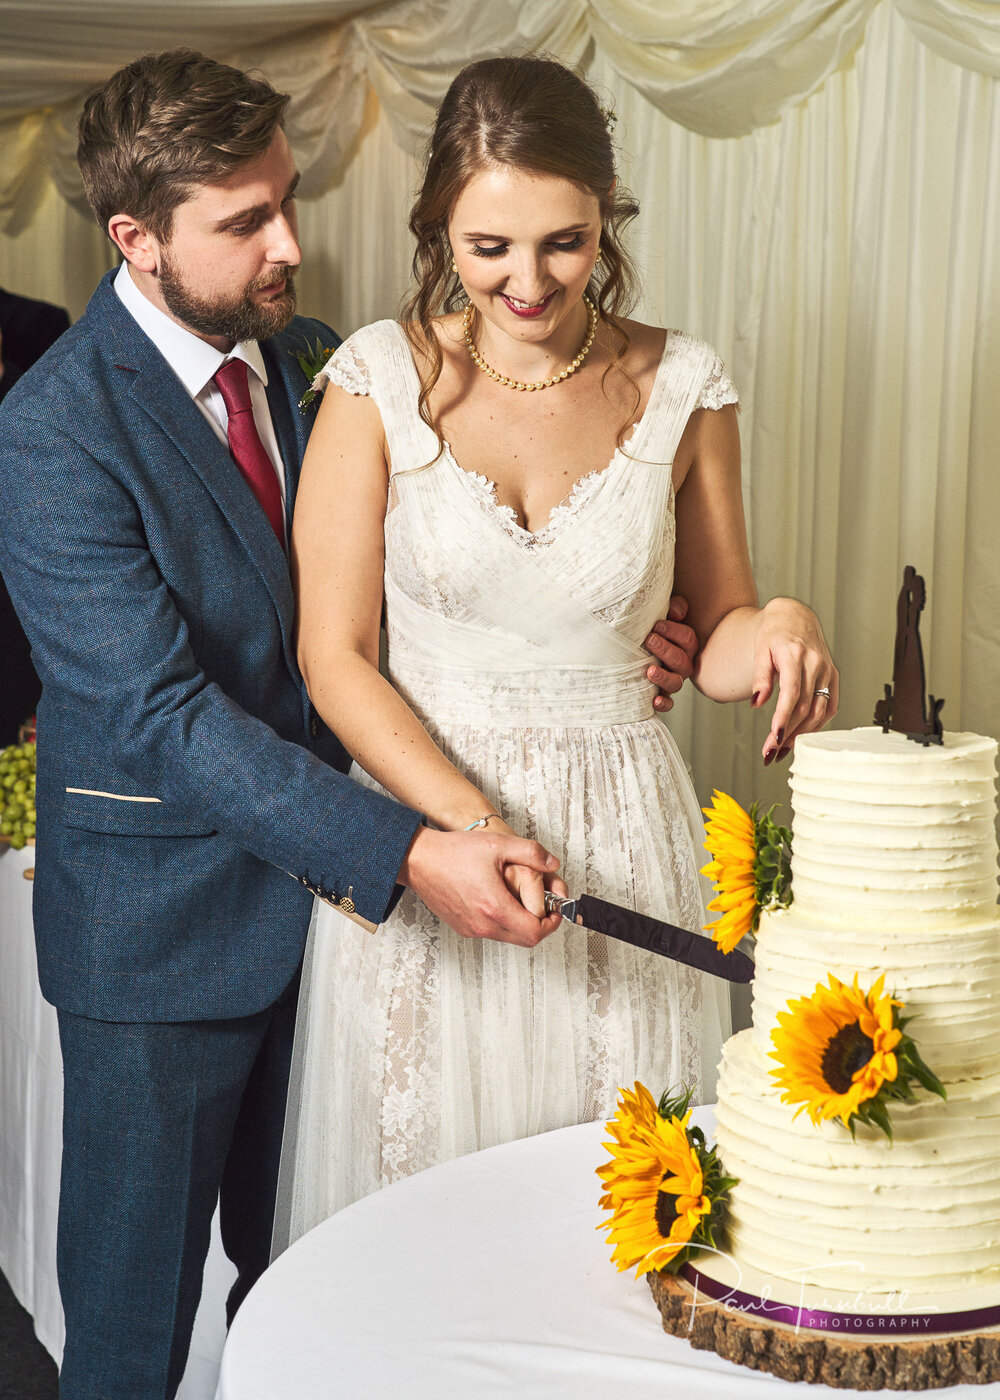 Cutting the Sunflower Wedding Cake. Sheffield Wedding Photography